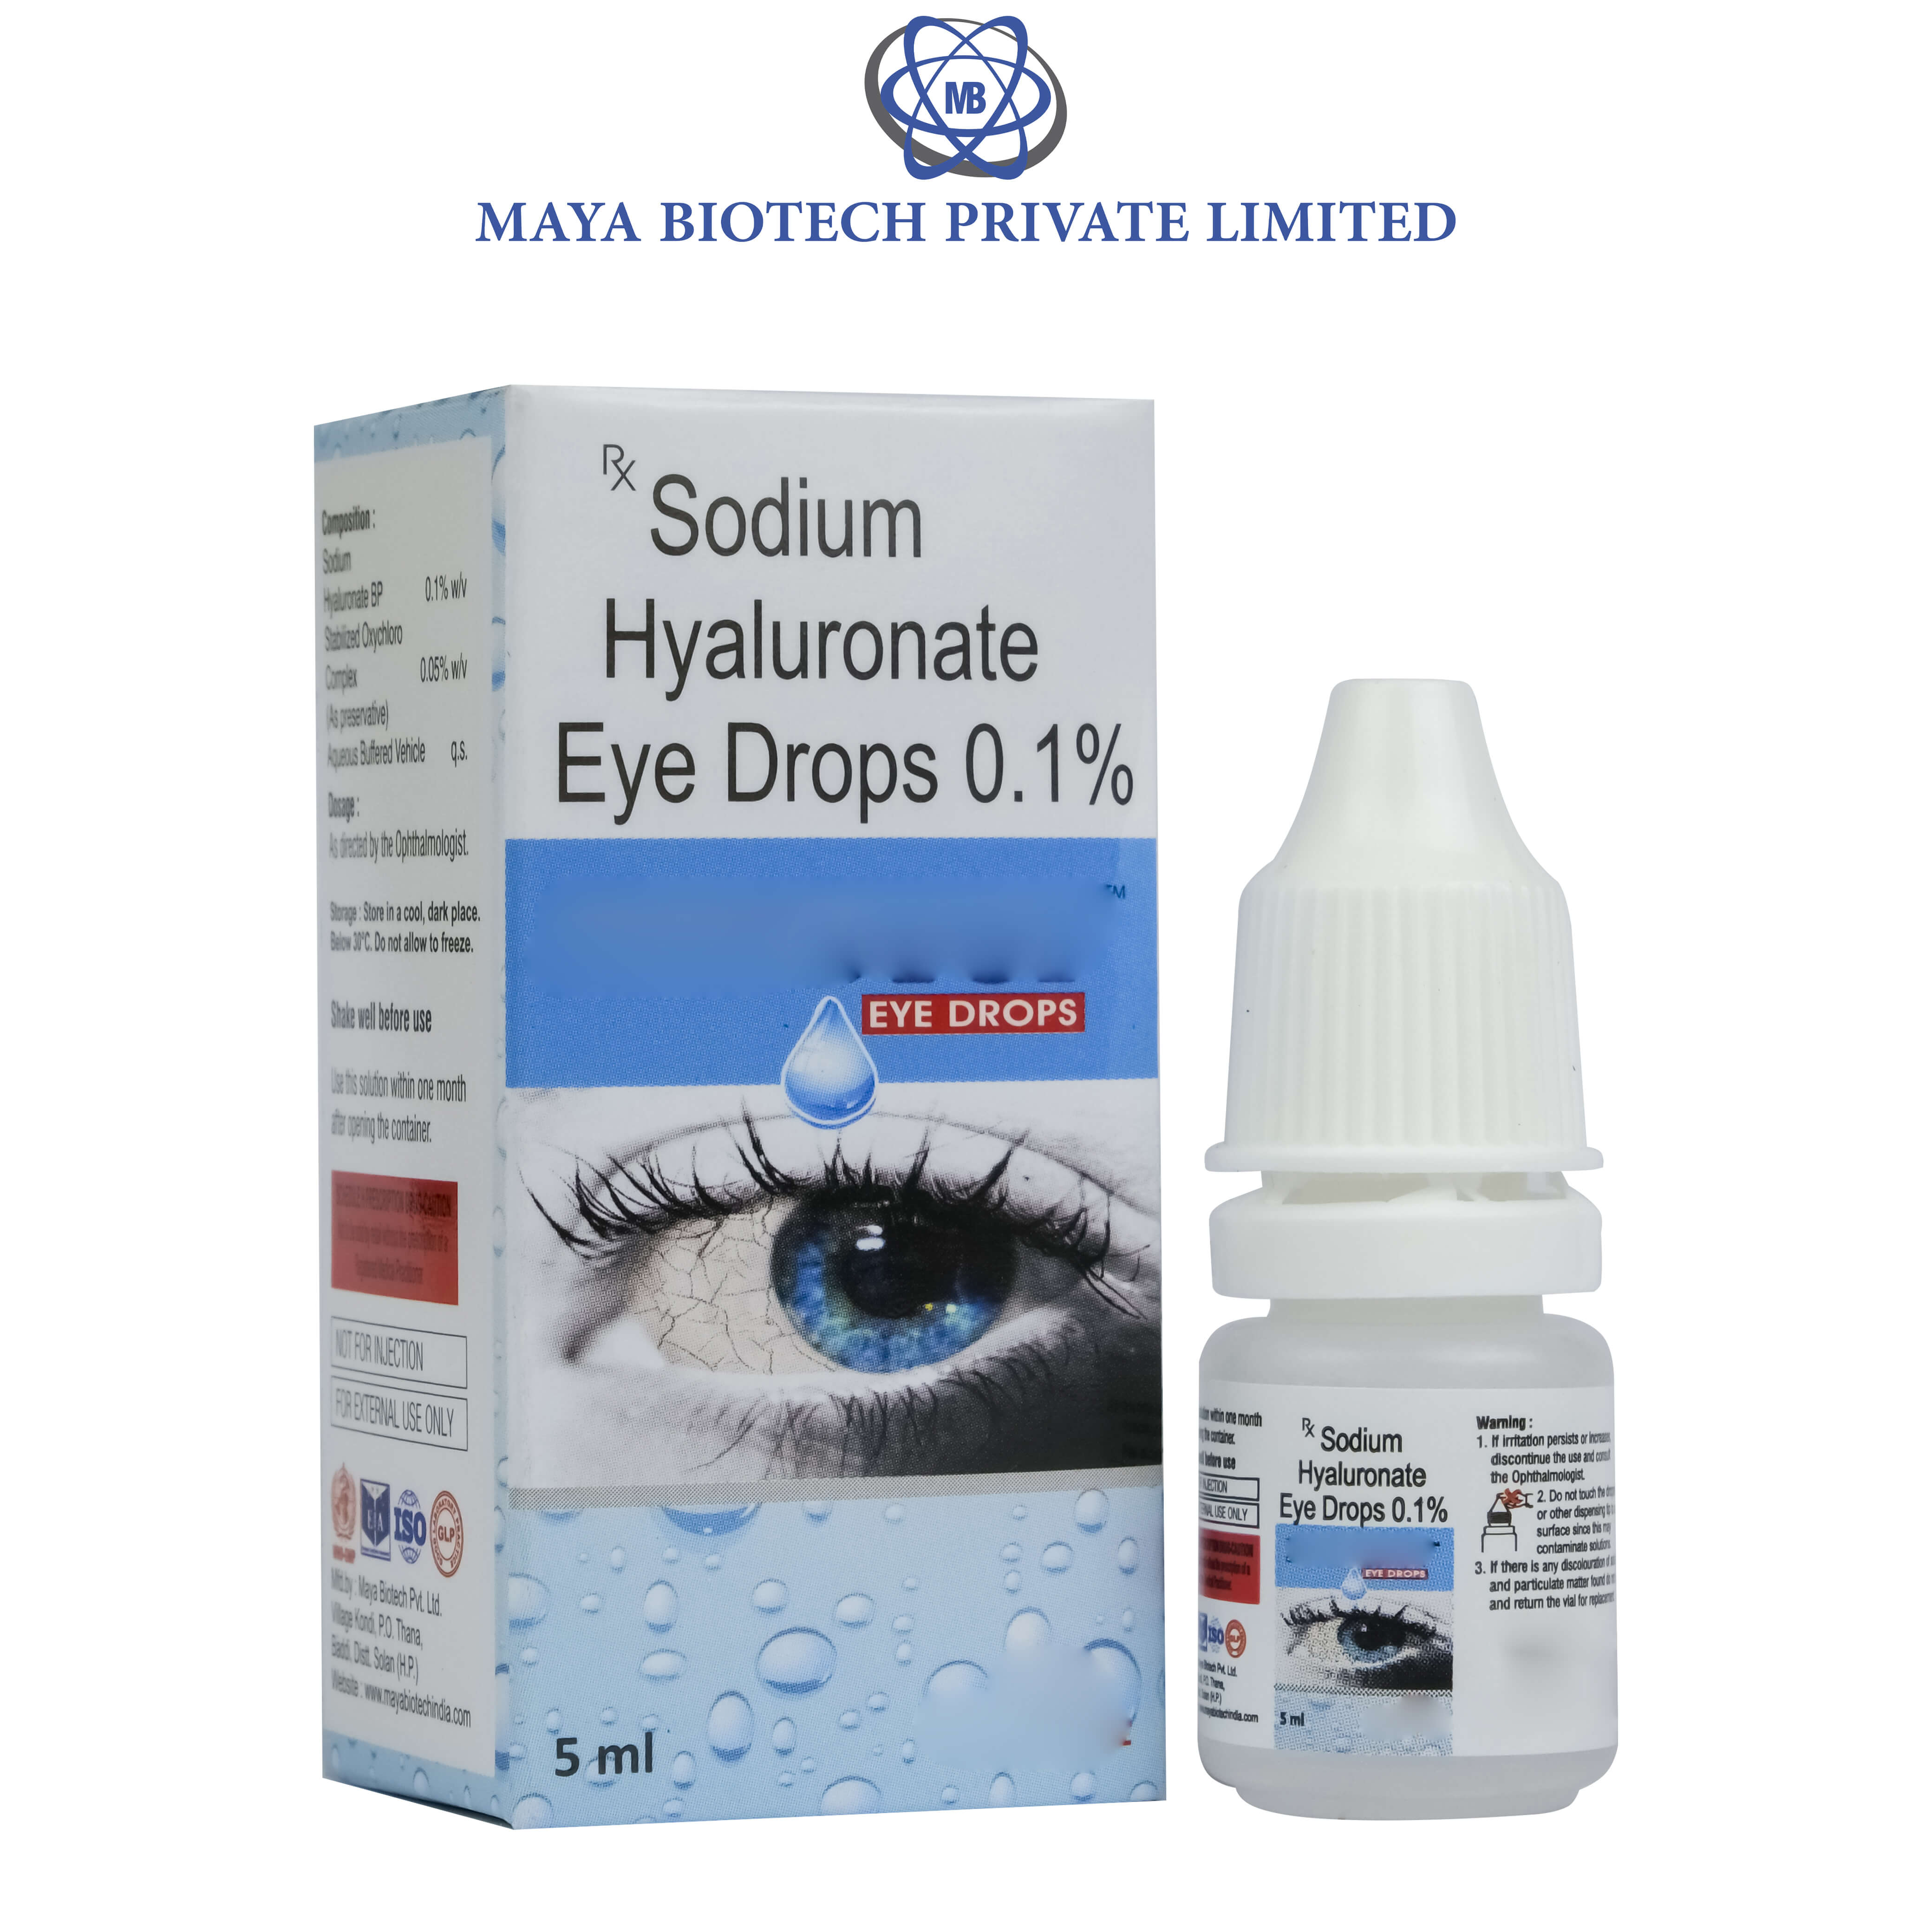 mayabiotechindia -     Sodium Hyaluronate Eye Drops